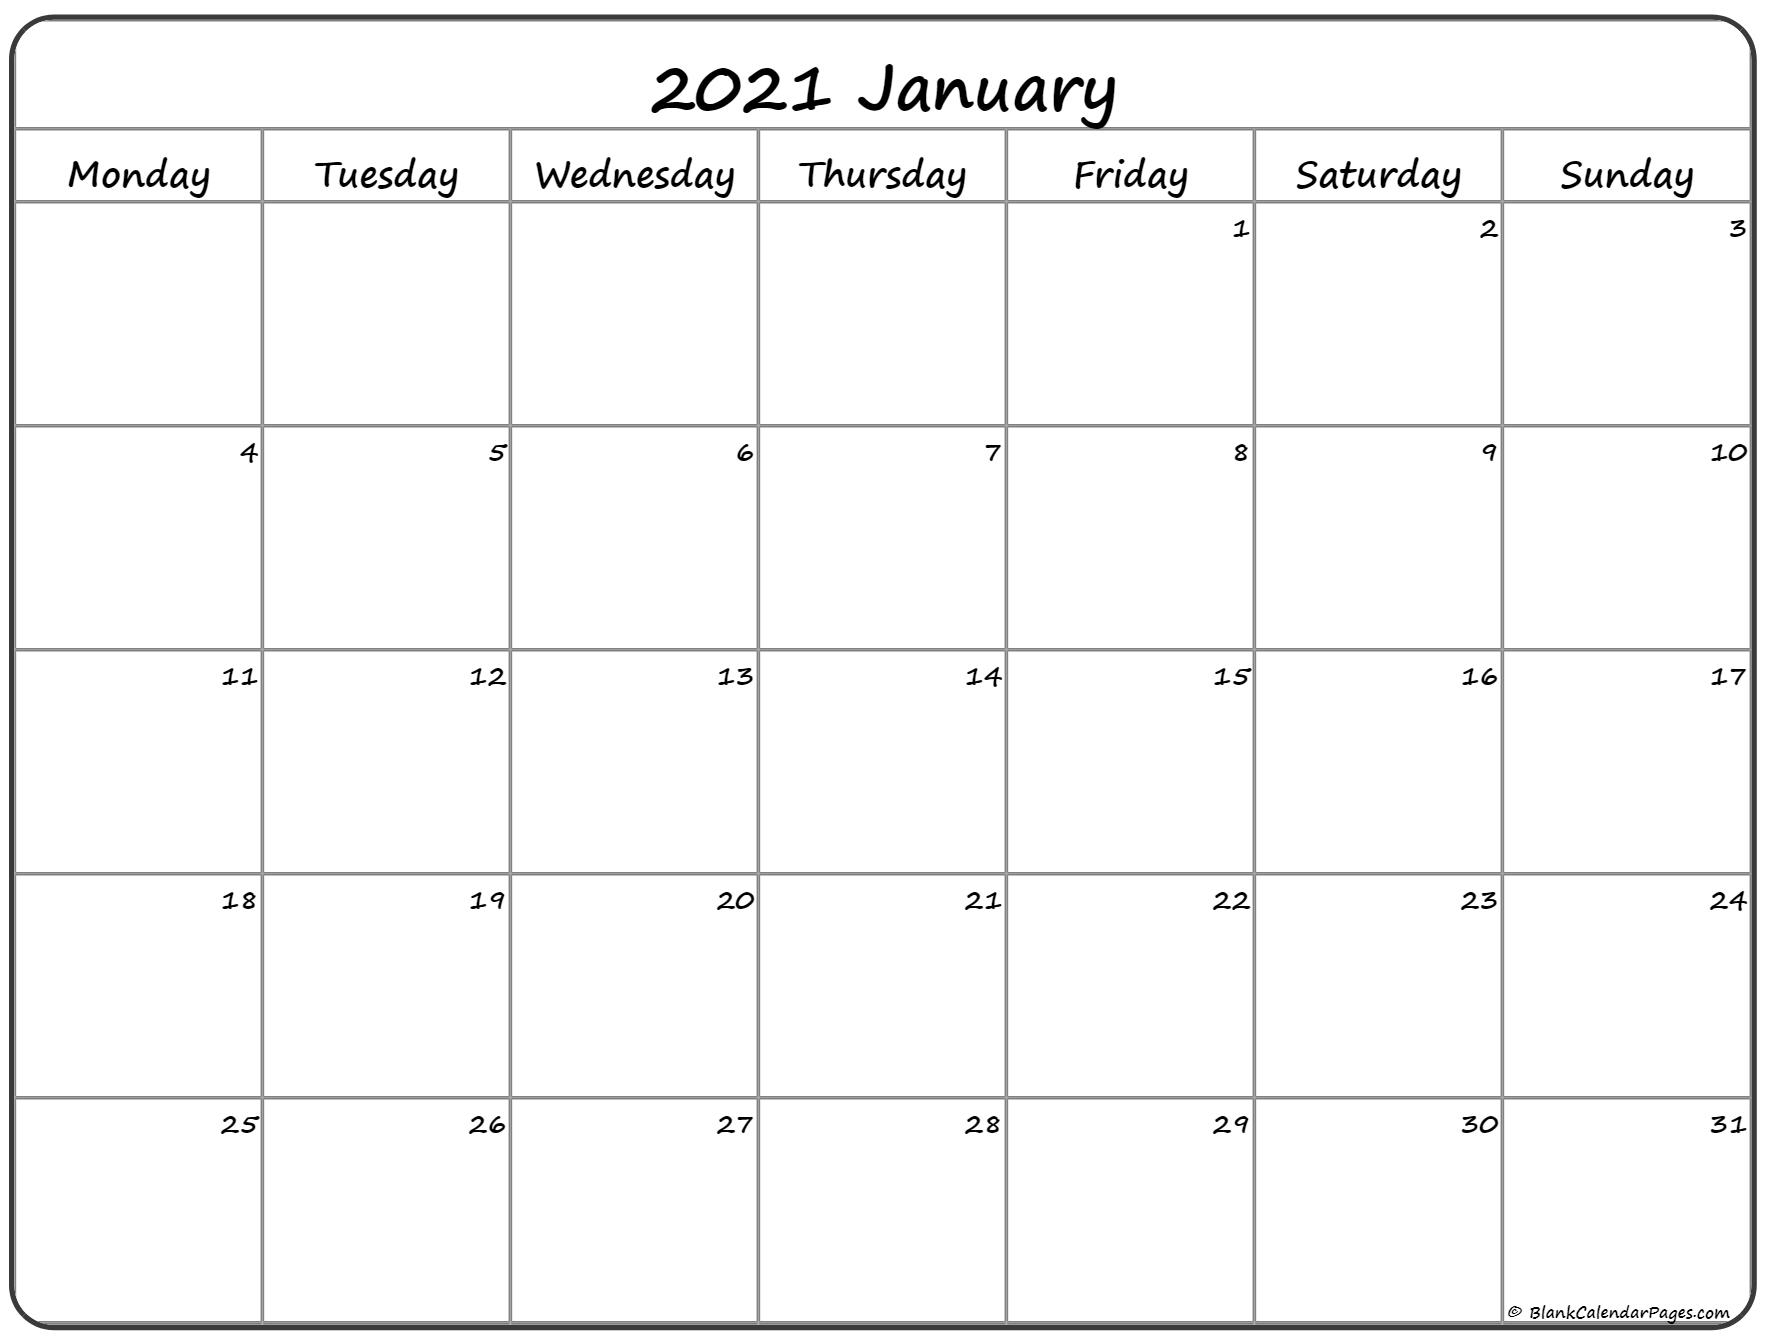 Sunday To Saturday Monthly Calendar 2021 | Calendar